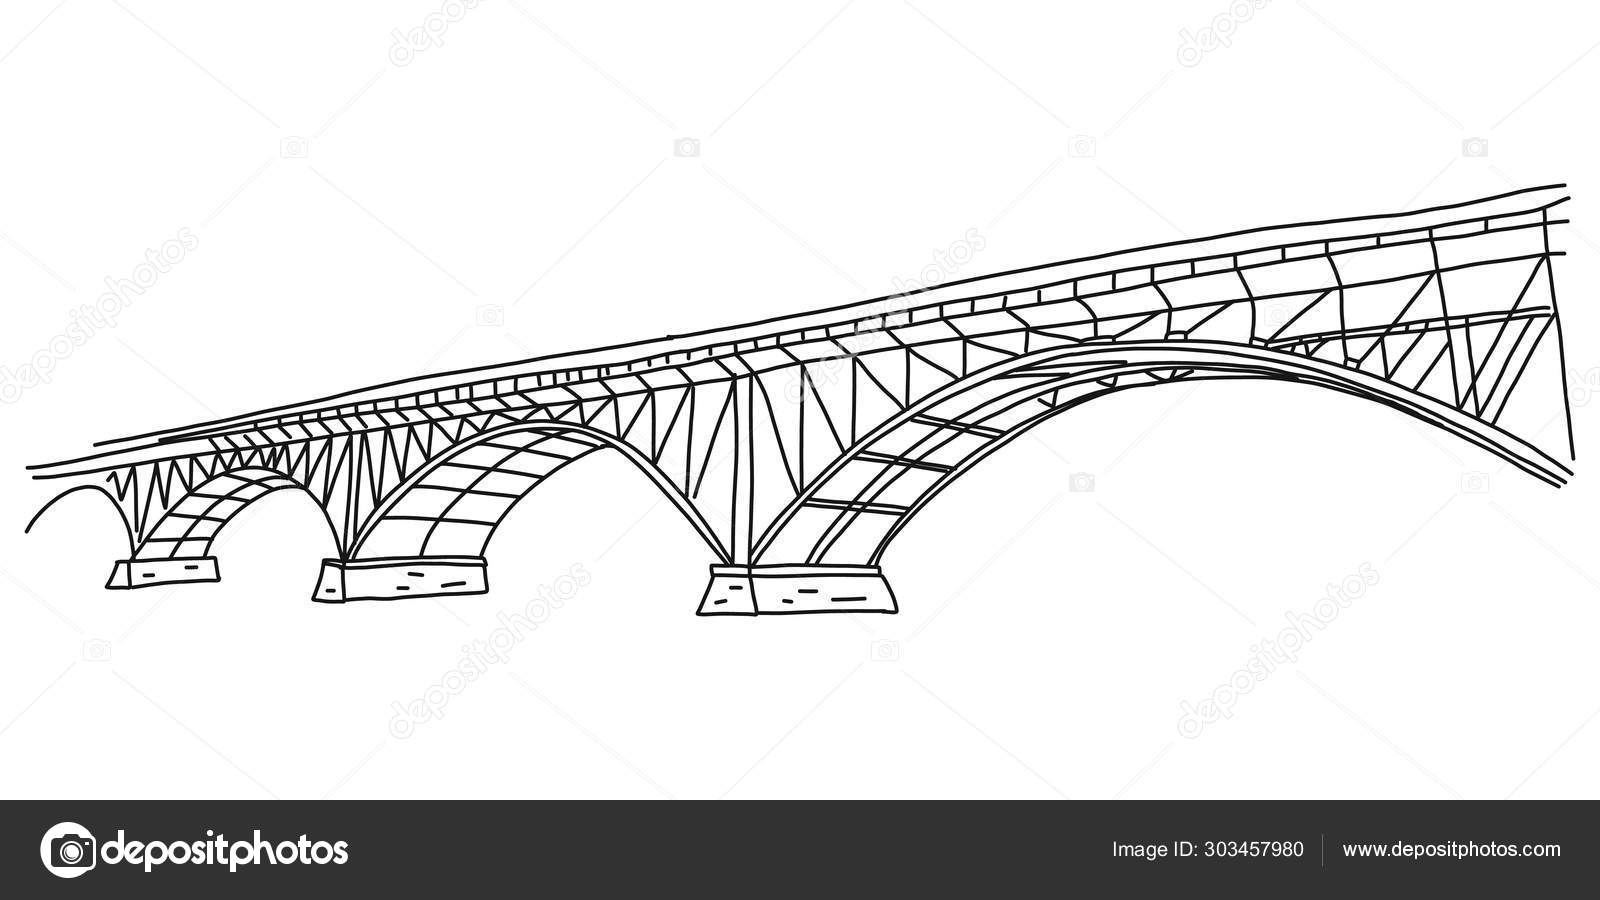 Stock Art Drawing of the Stone Arch Bridge, Minneapolis